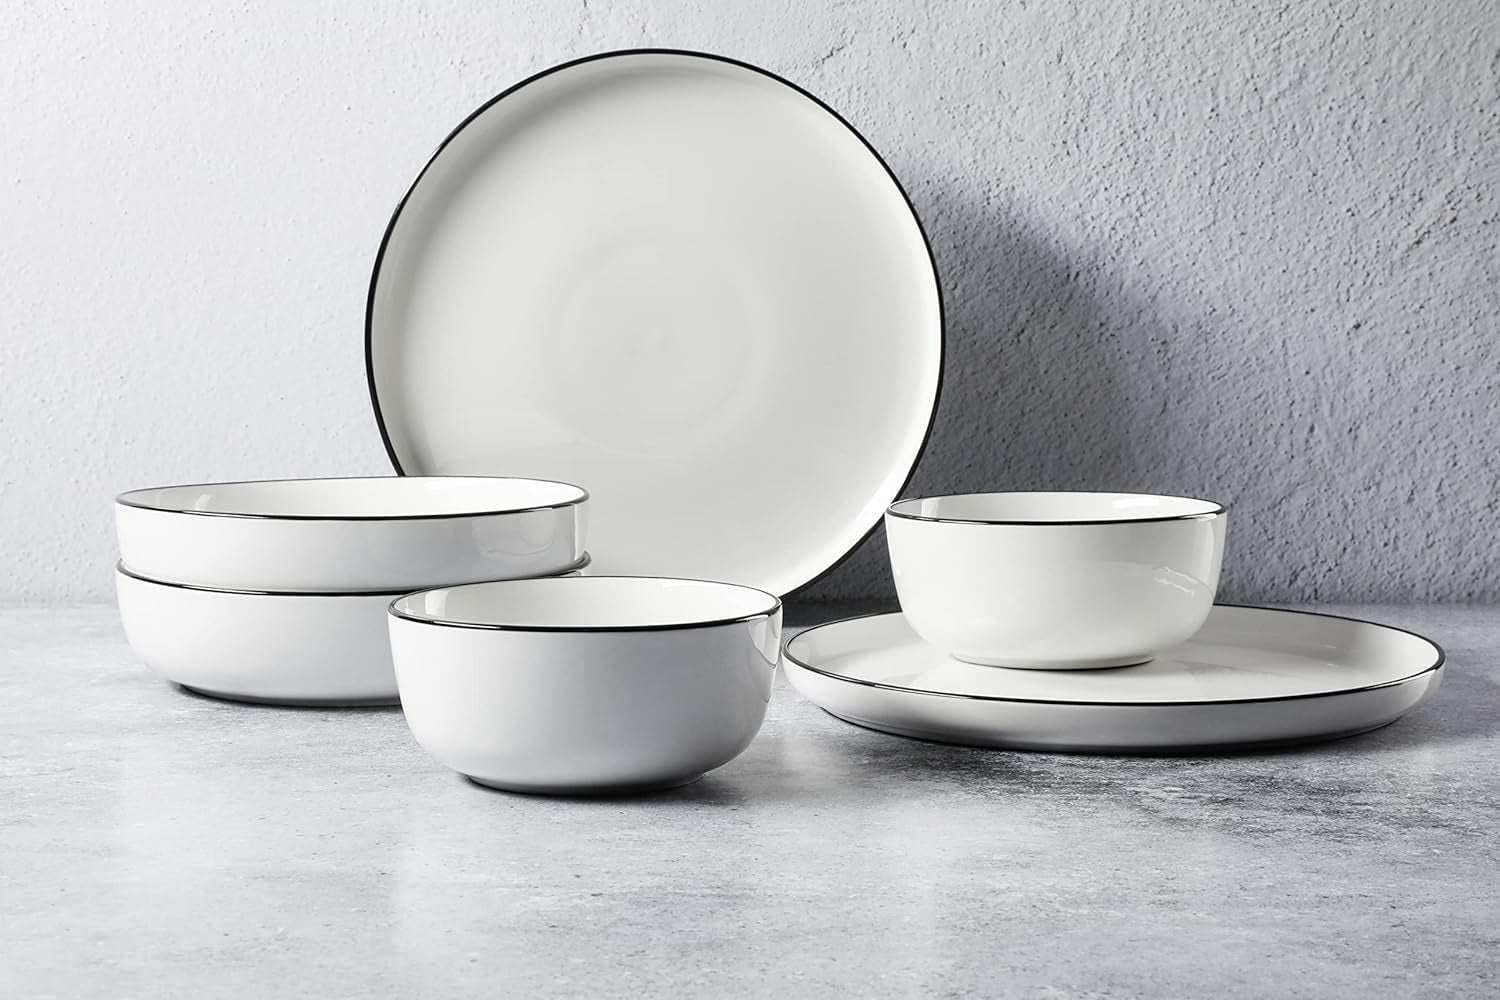 Oslo 16 Piece Porcelain Dinnerware Set, White W/Black Rim, Service for 4 (16Pcs)